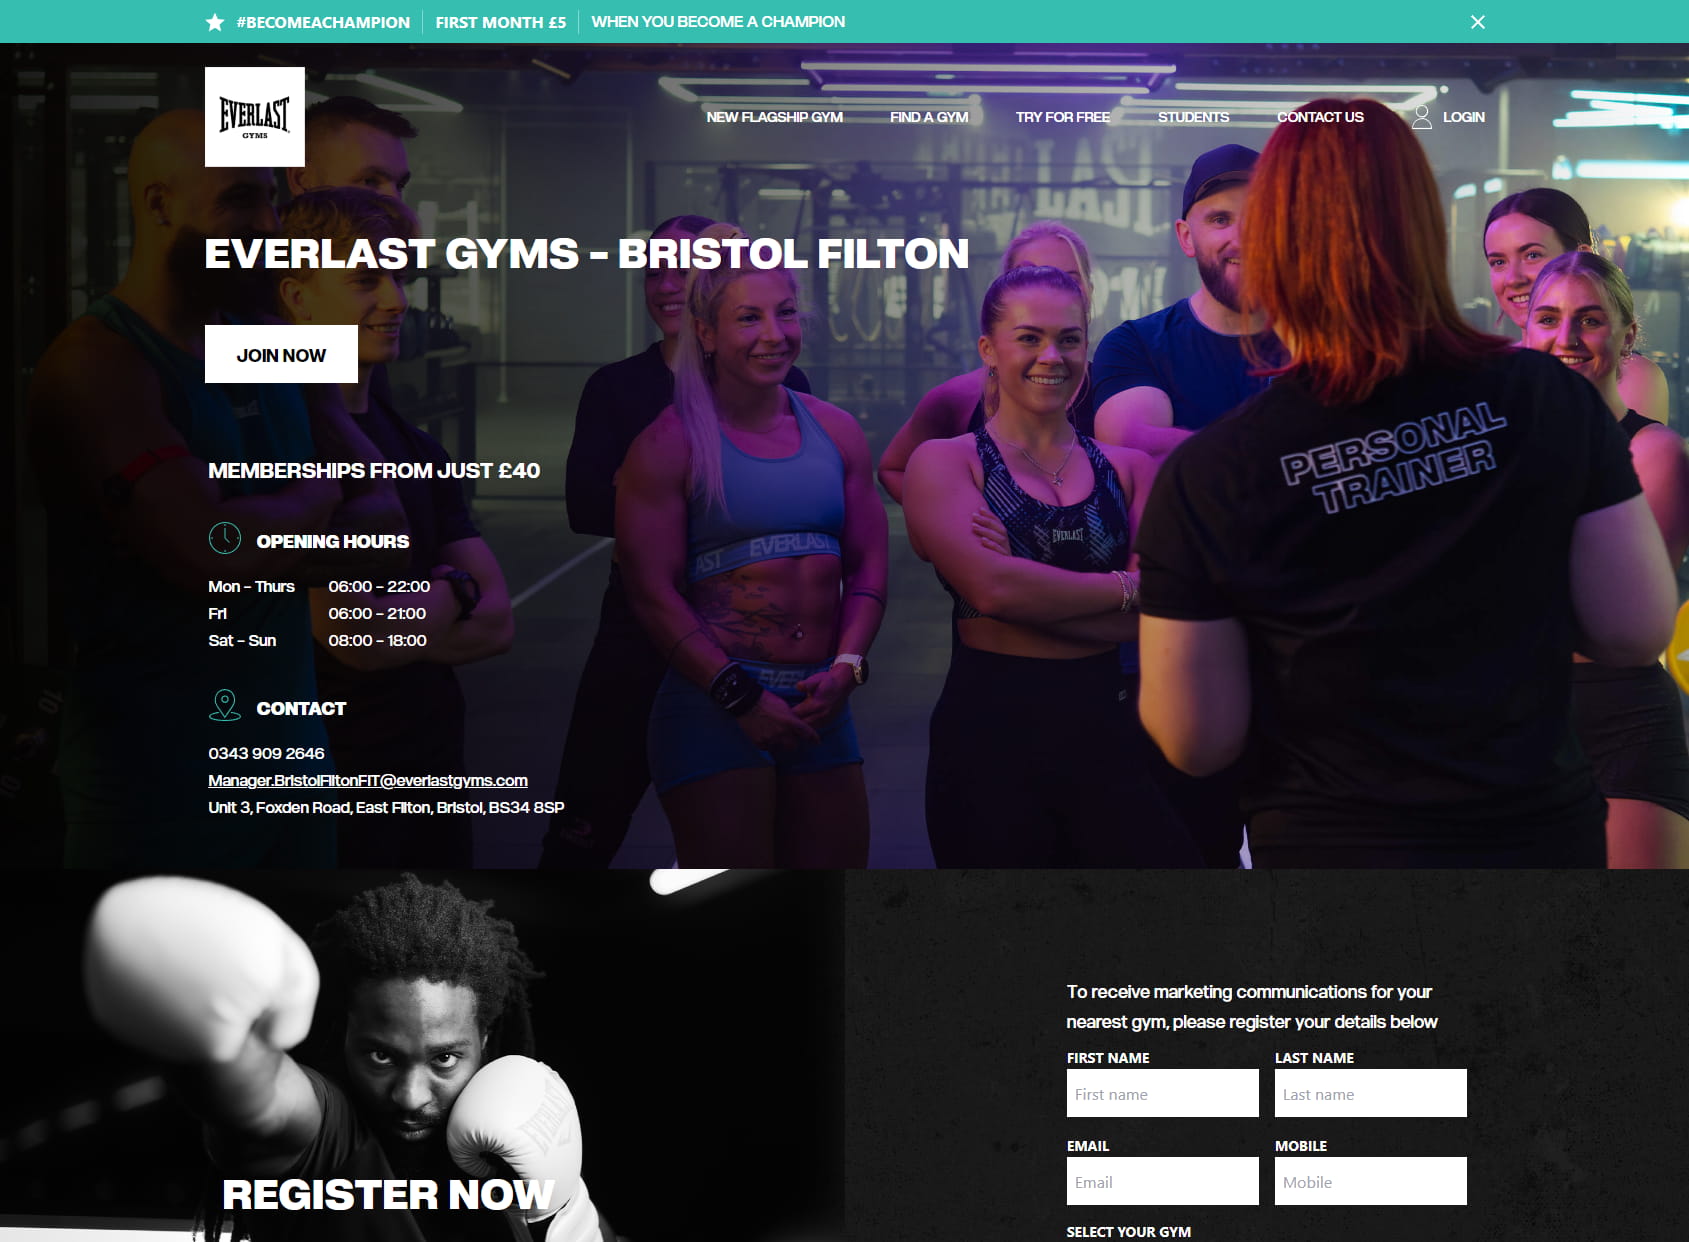 Everlast Gyms - Bristol Filton